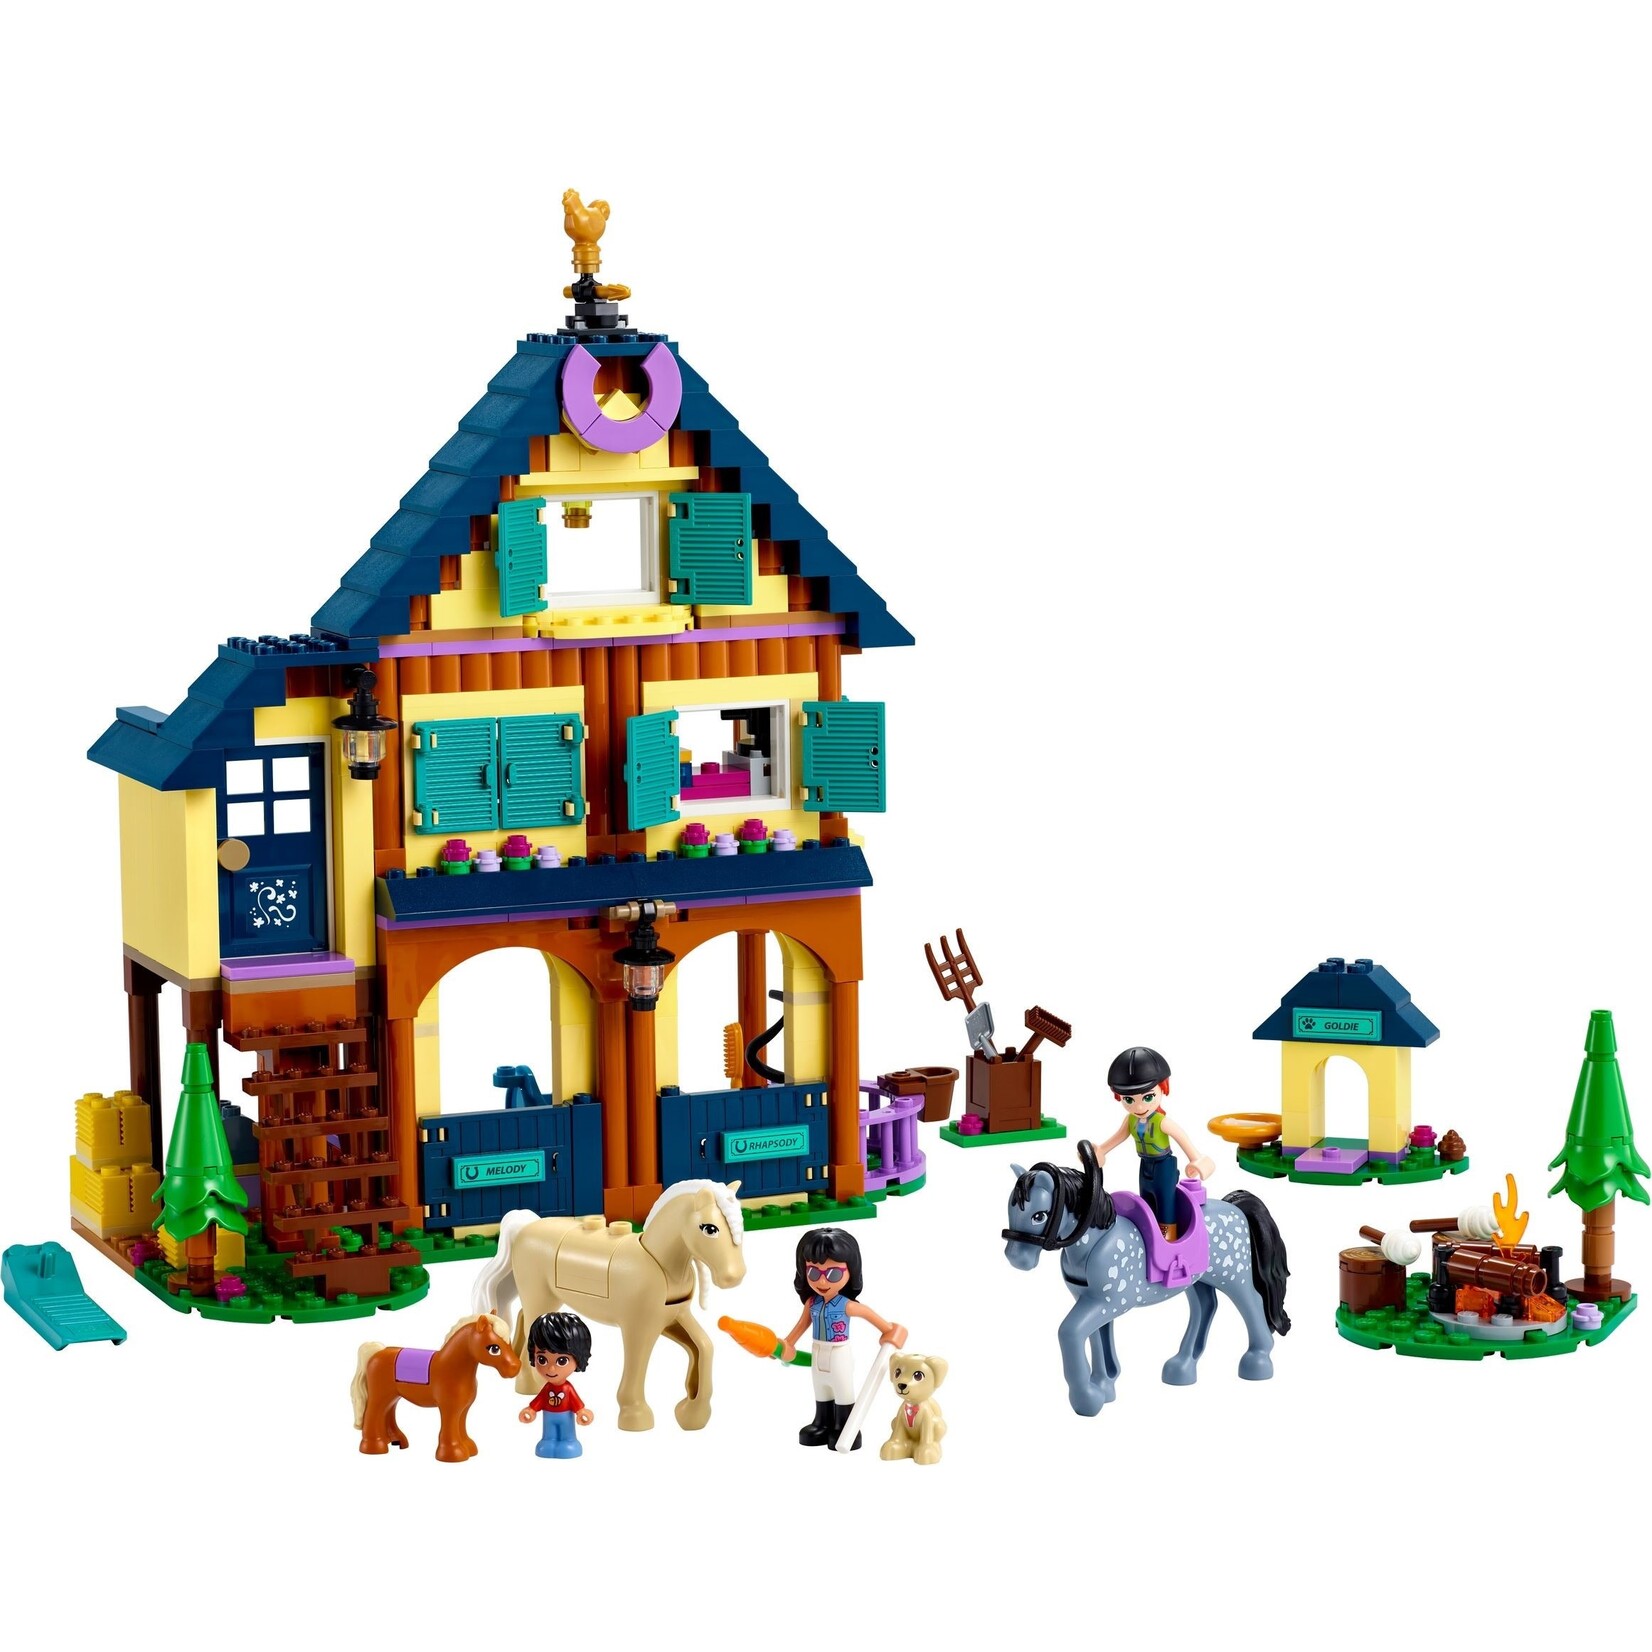 LEGO Paardrijdbasis in het bos Set - 41683